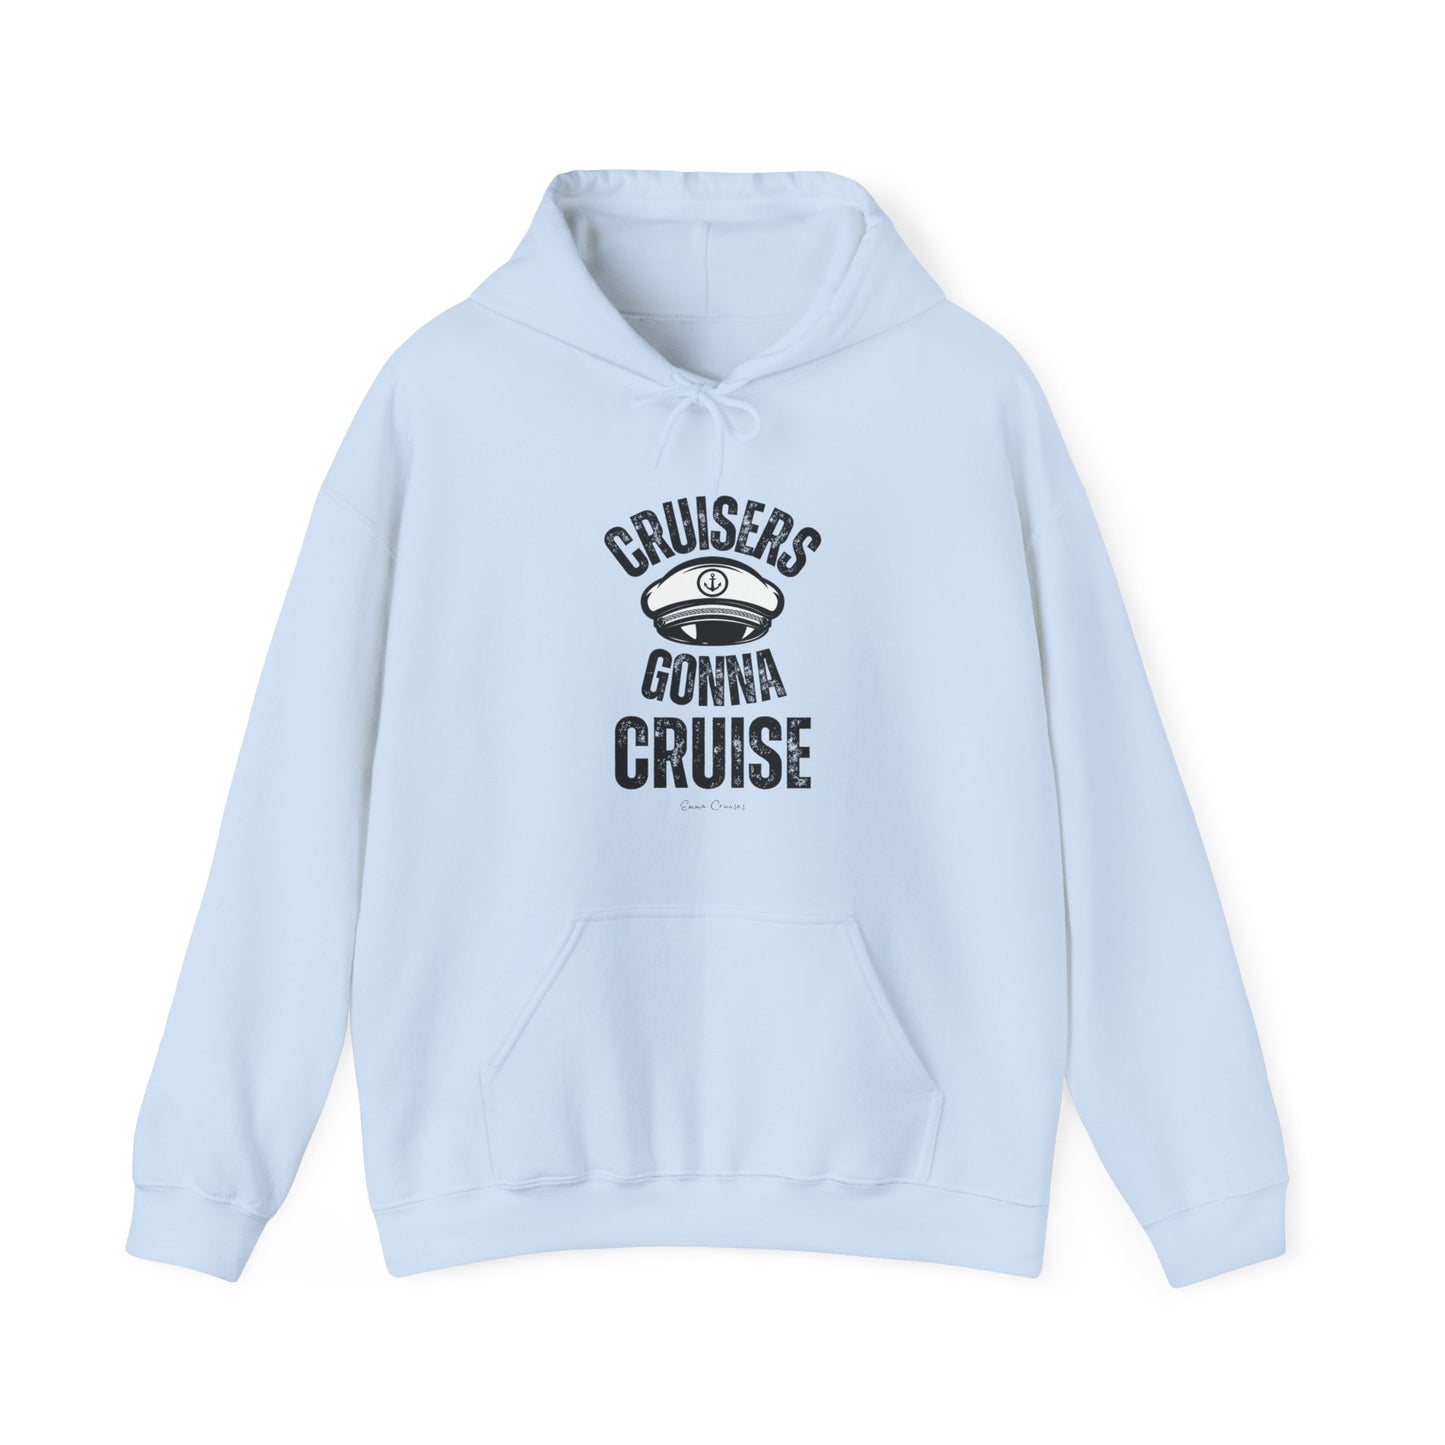 Cruisers Gonna Cruise - UNISEX Hoodie